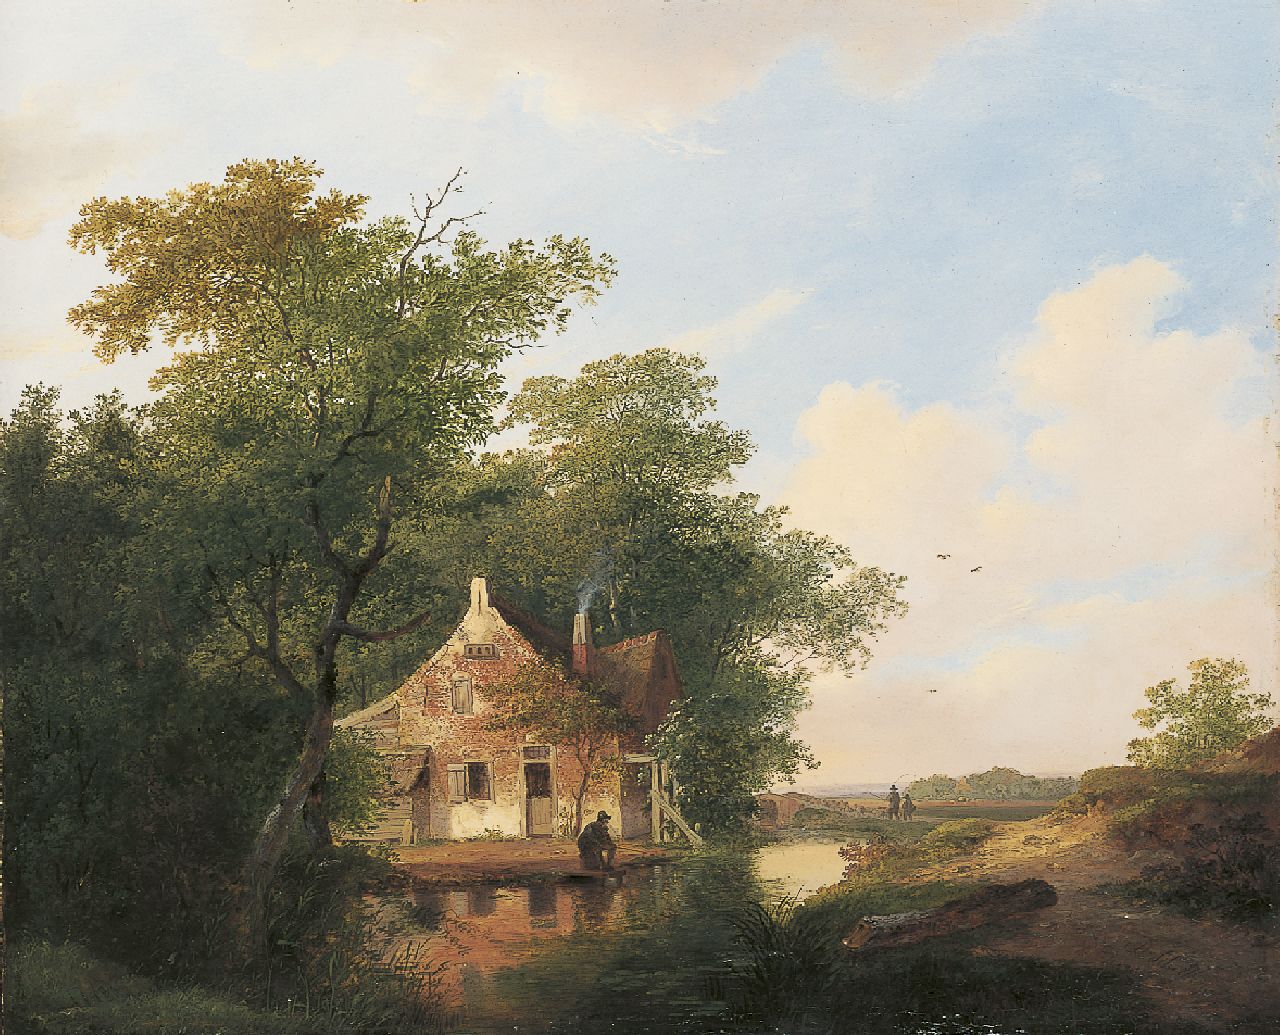 Stok J. van der | Jacobus van der Stok, A farmer's house and fisherman near a canal, Öl auf Holz 41,8 x 50,7 cm, dated 1826